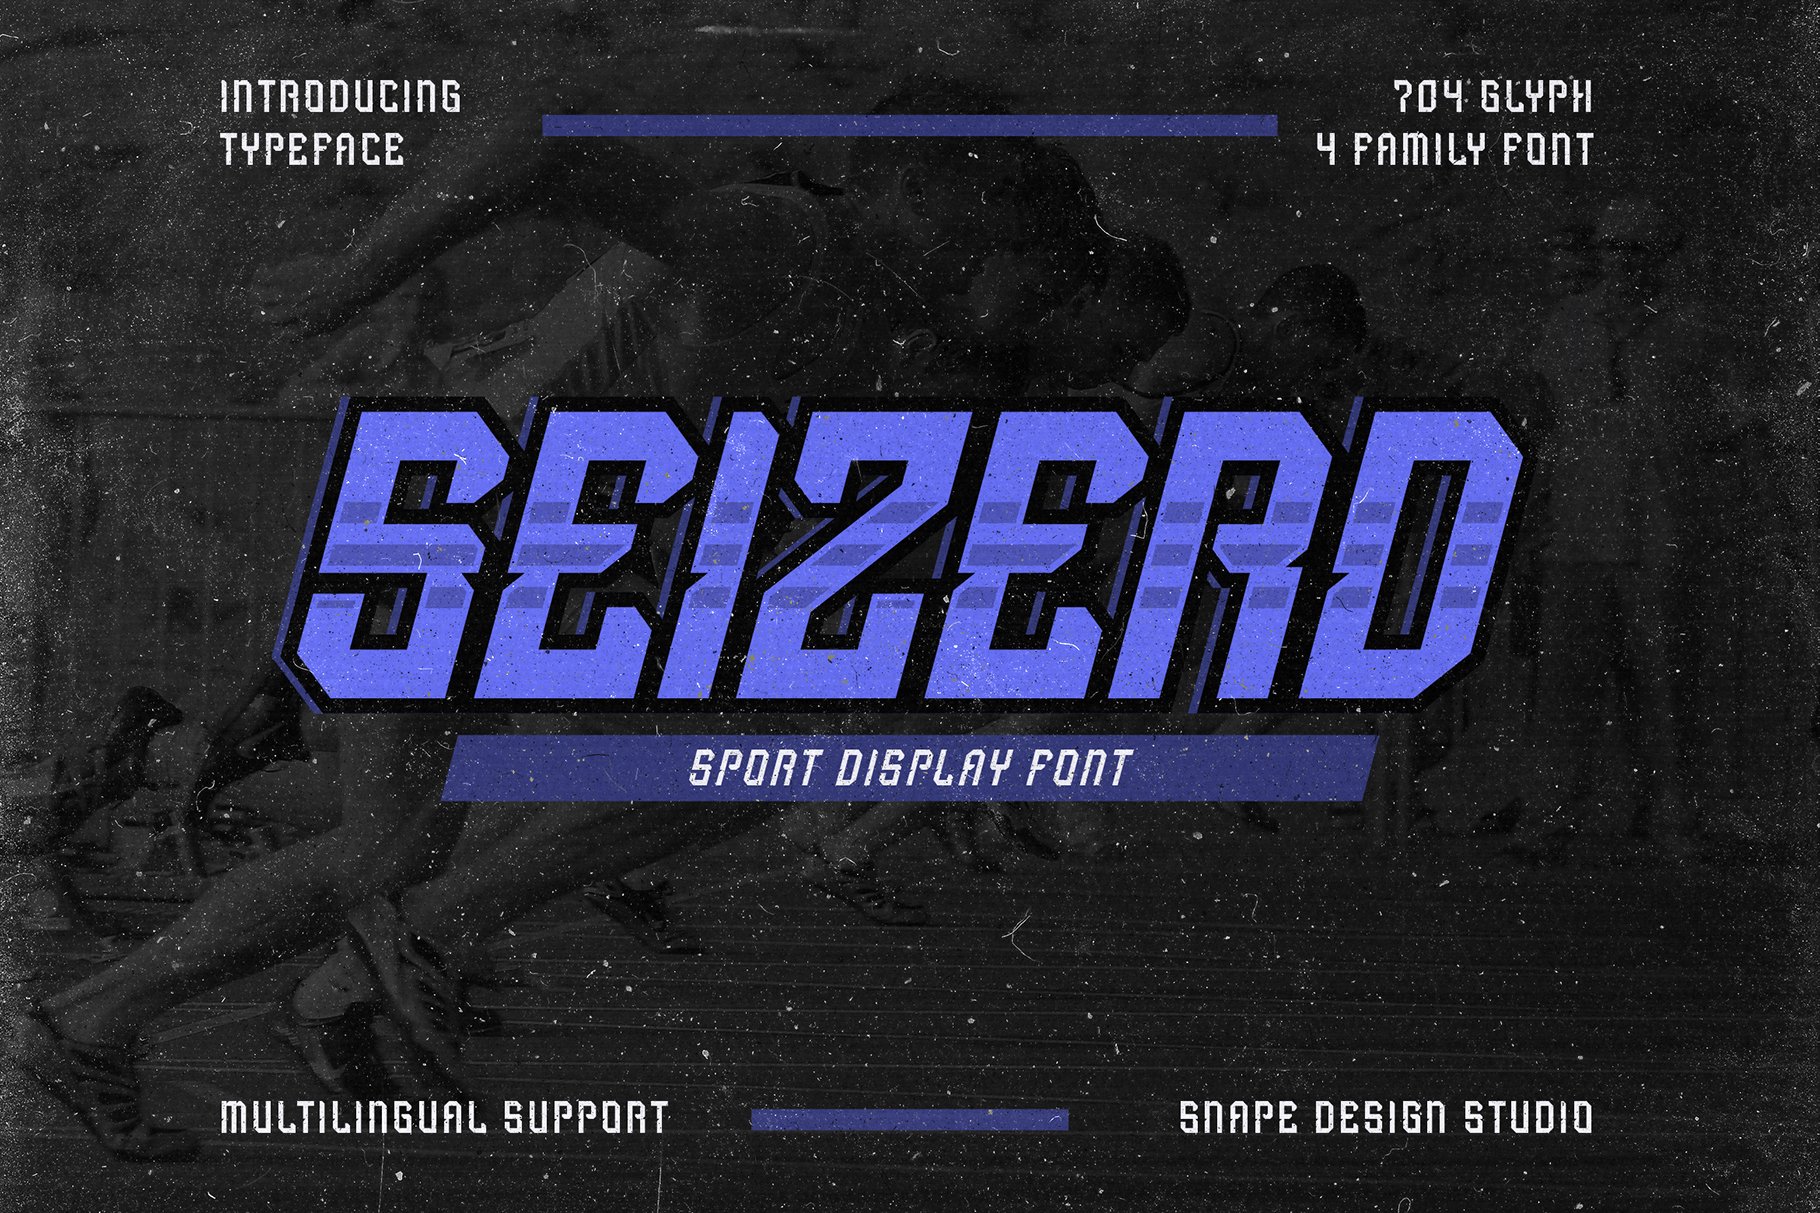 Seizerd - Sport Font cover image.